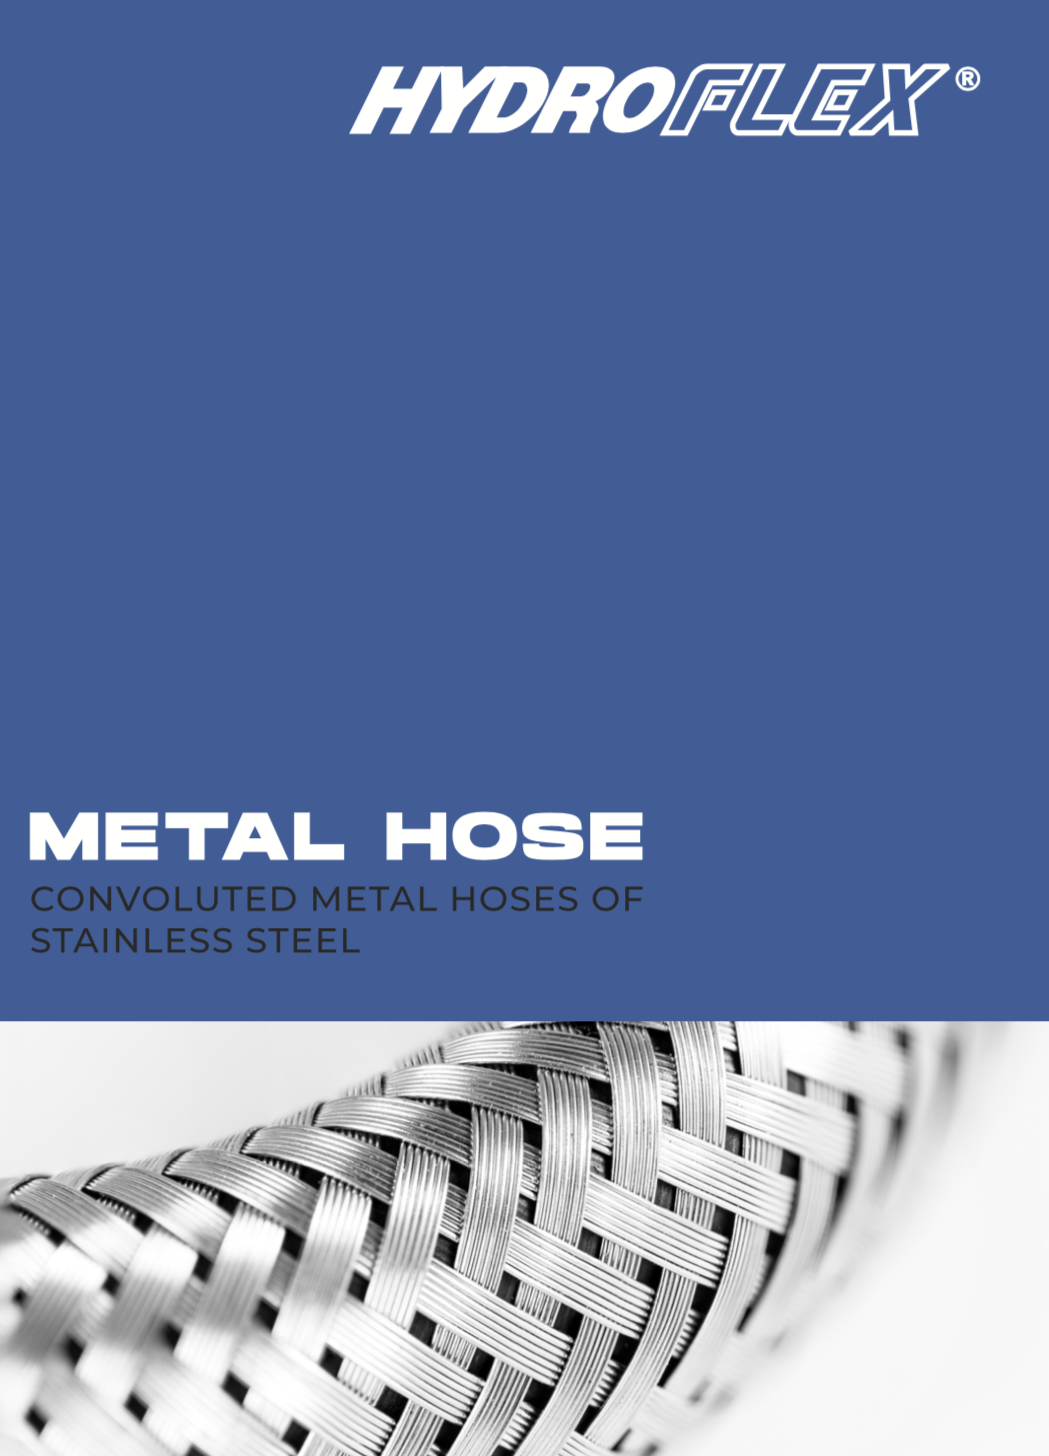 metal hose supplier in dubai